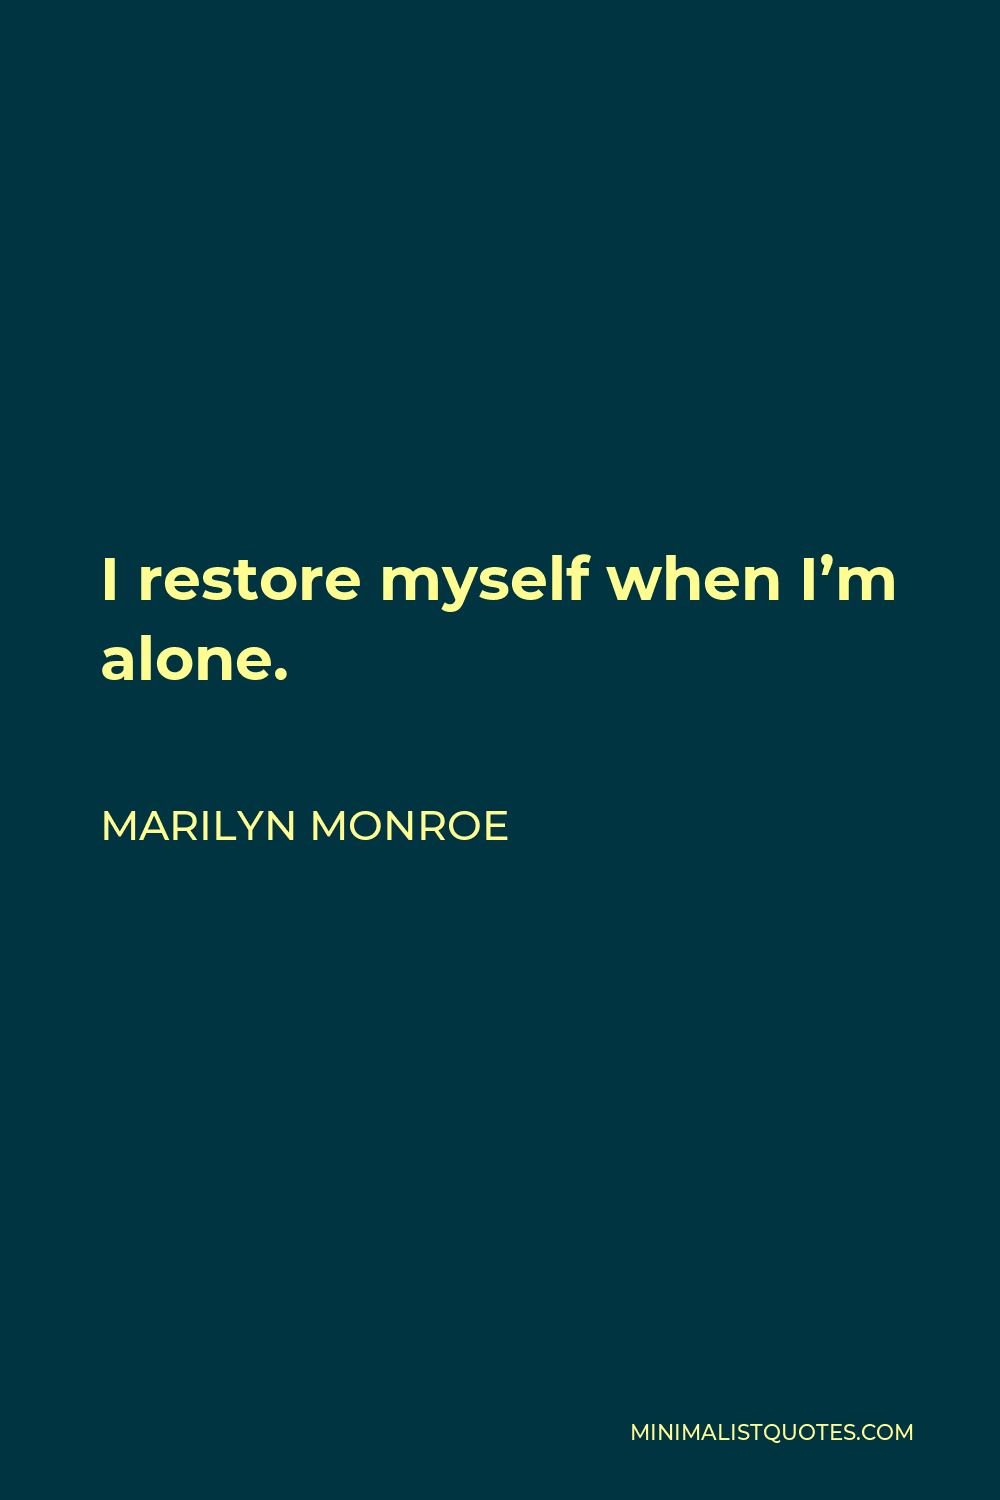 Marilyn Monroe Quote: I restore myself when I'm alone.